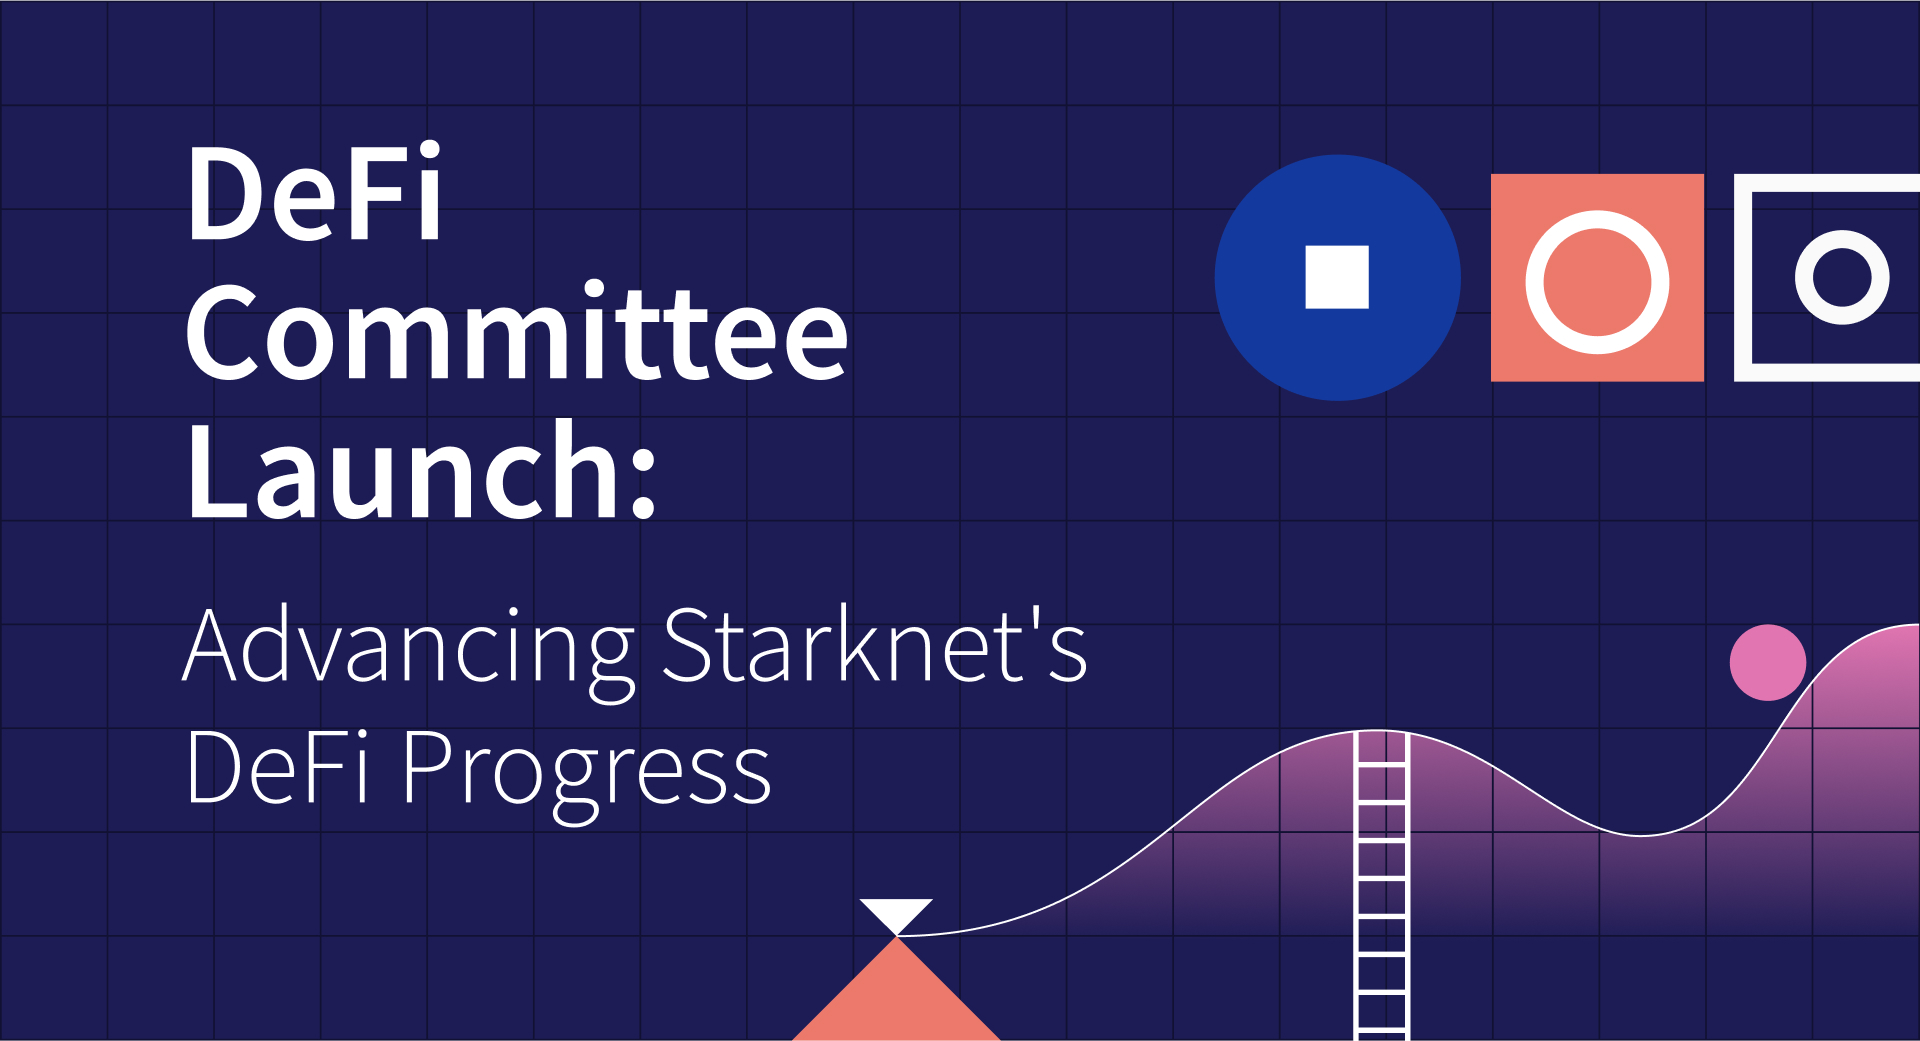 DeFi Committee Launch: Advancing Starknet’s DeFi Progress